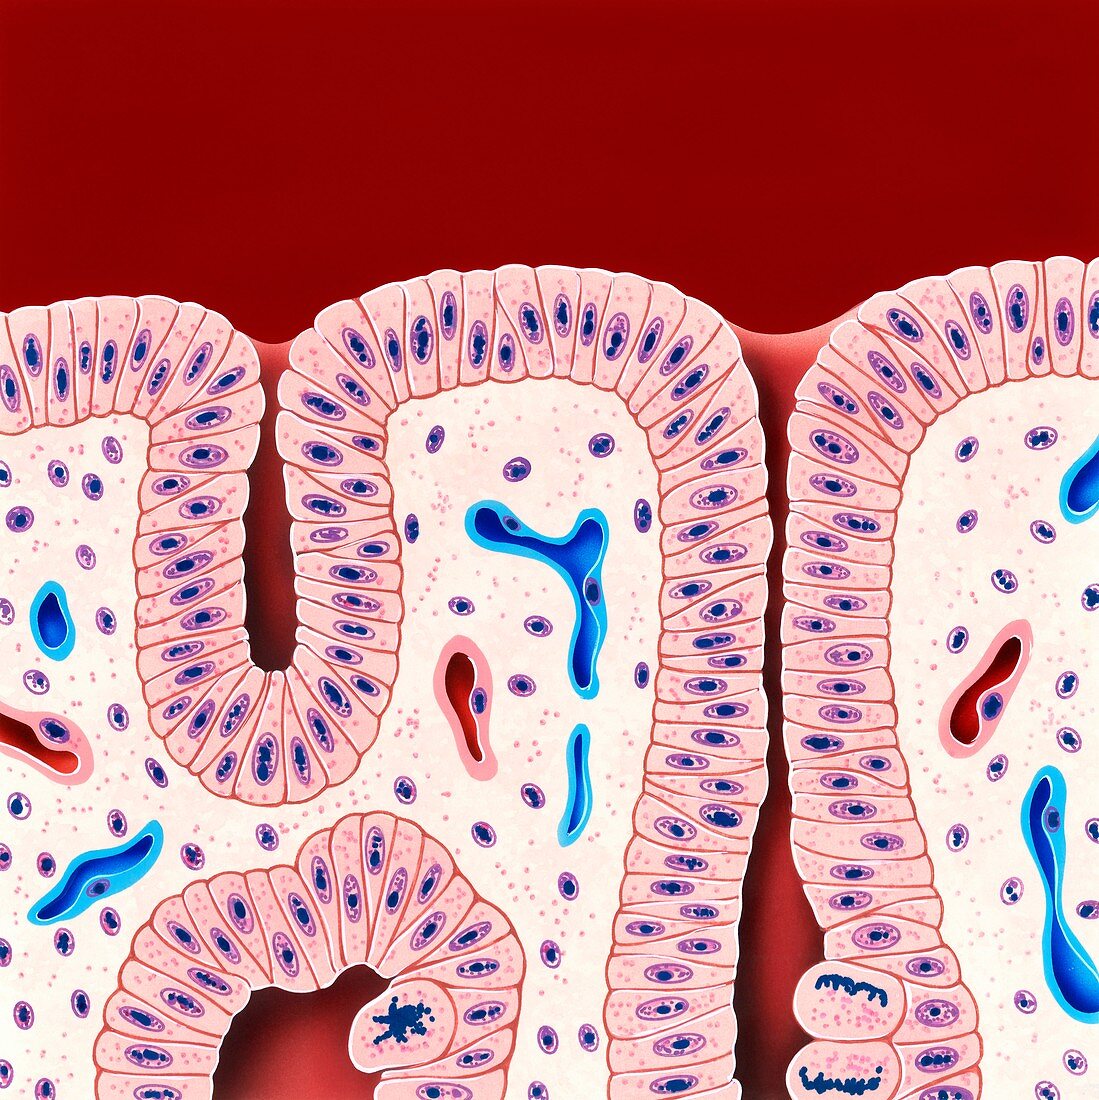 Proliferative phase in digestive system, illustration